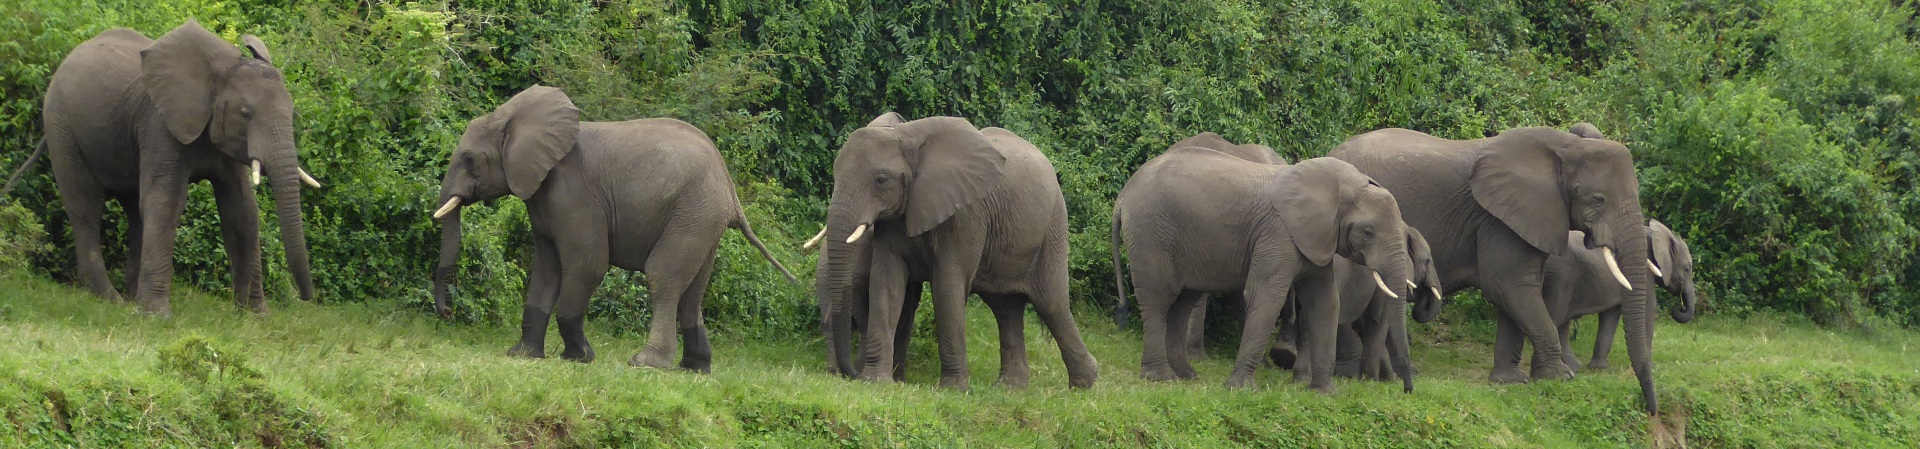 Elephants at Queen Elizabeth National Park in Uganda